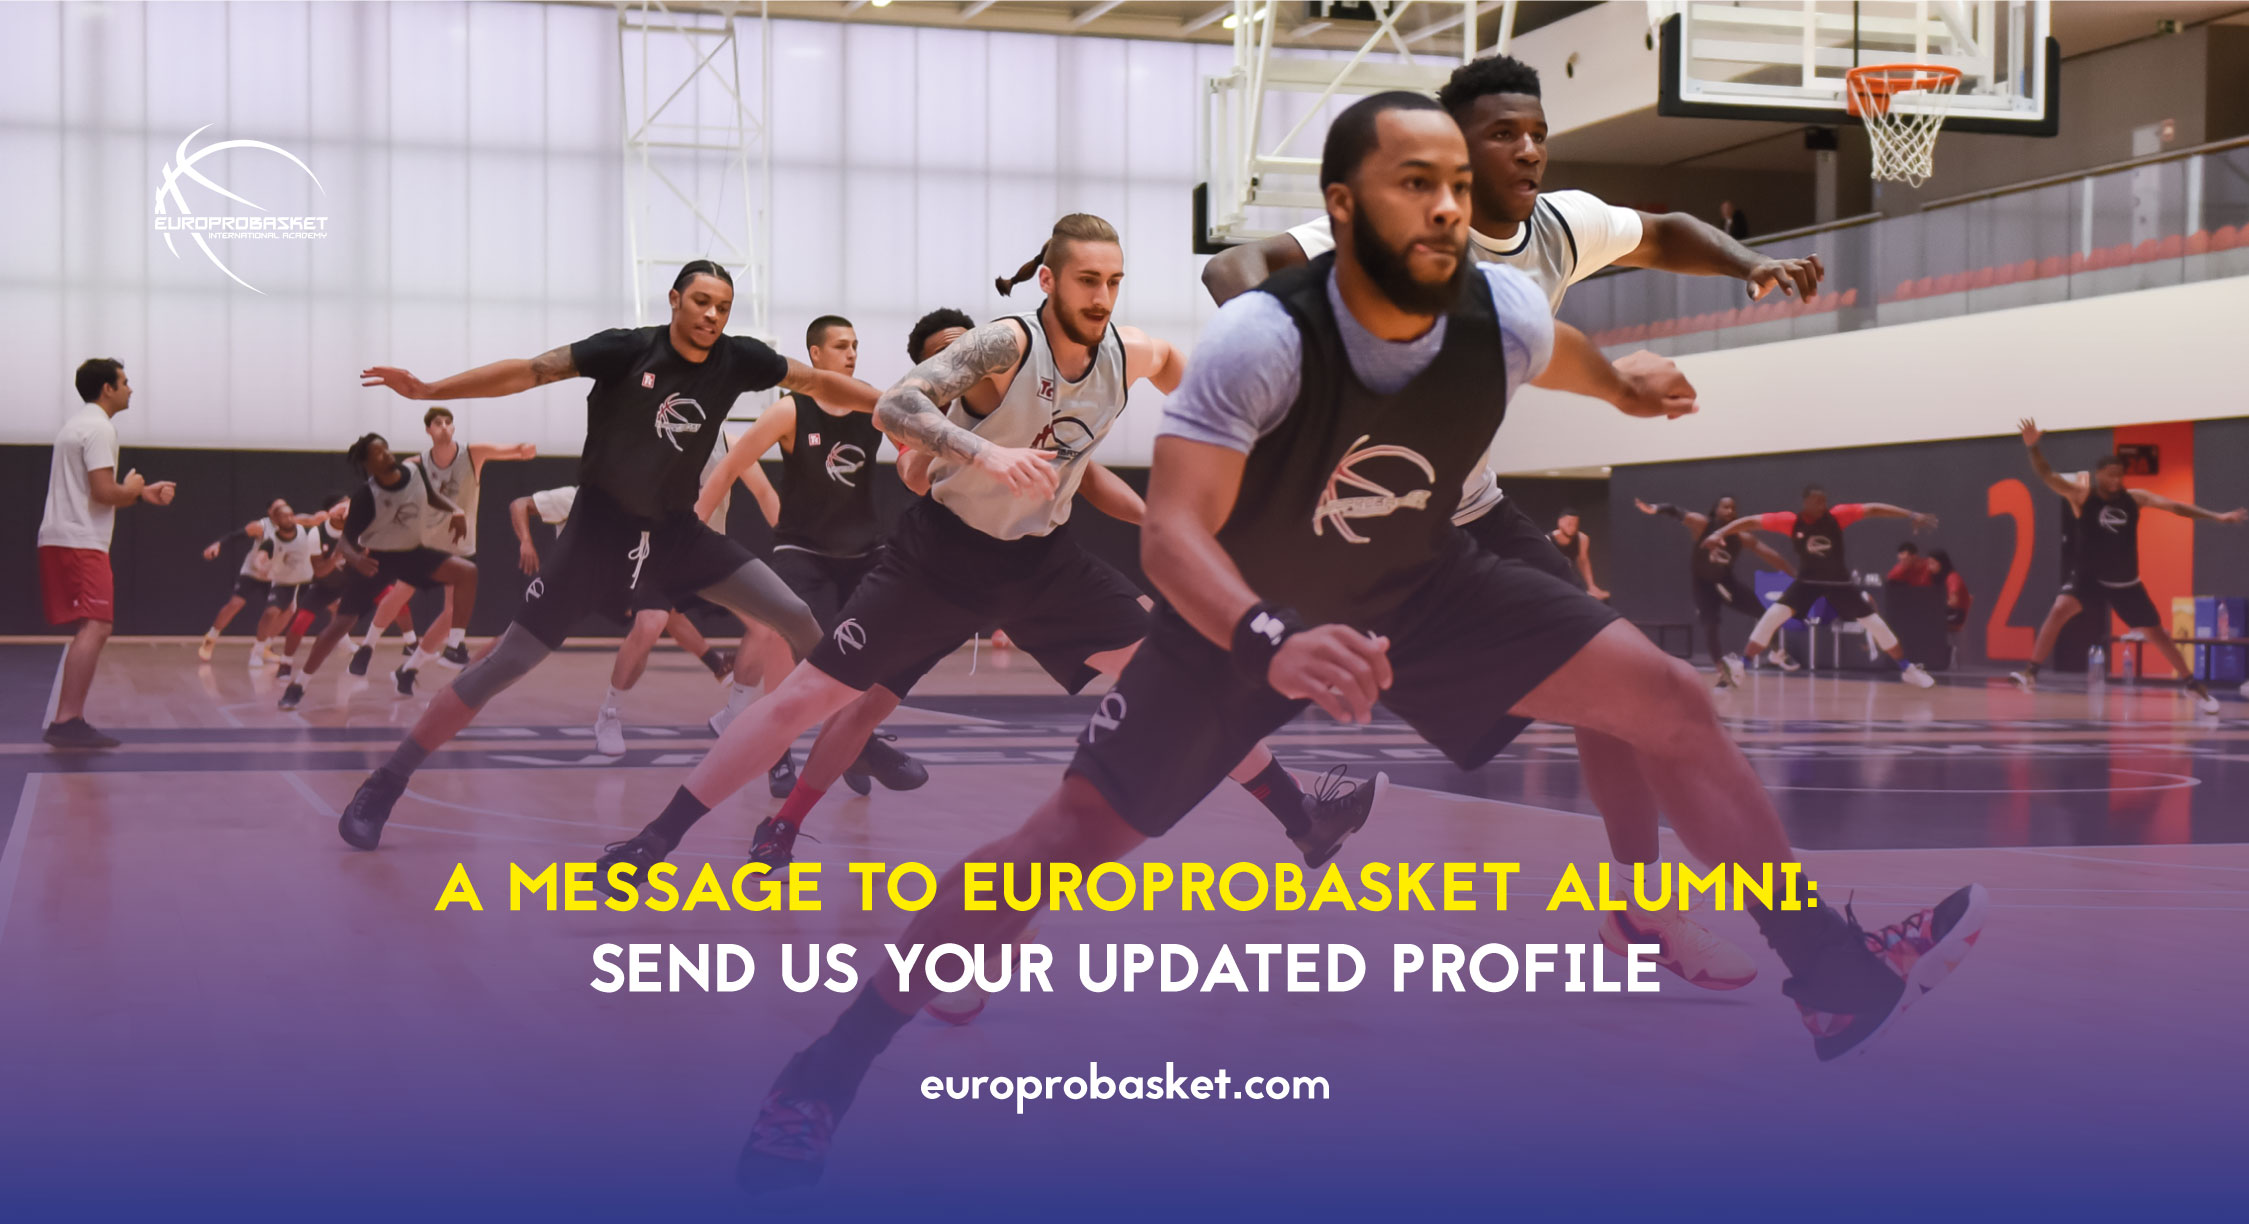 basketball job openings for europrobasket players